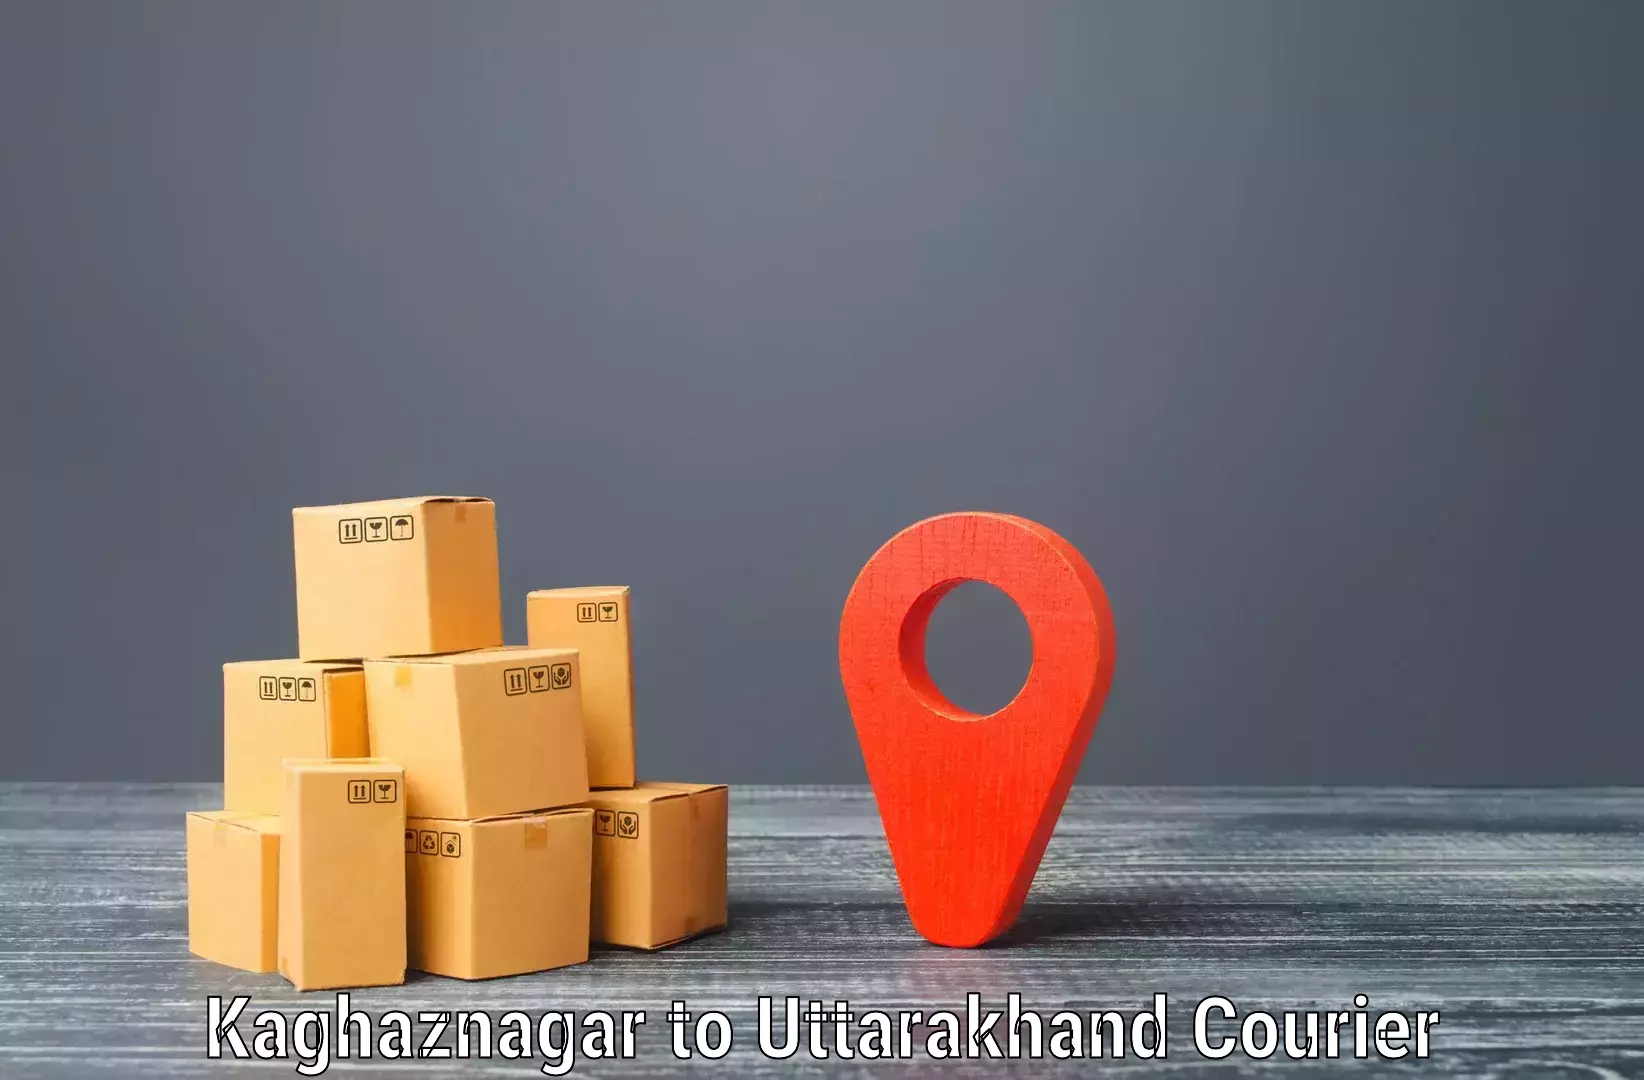 Smart shipping technology Kaghaznagar to Paithani